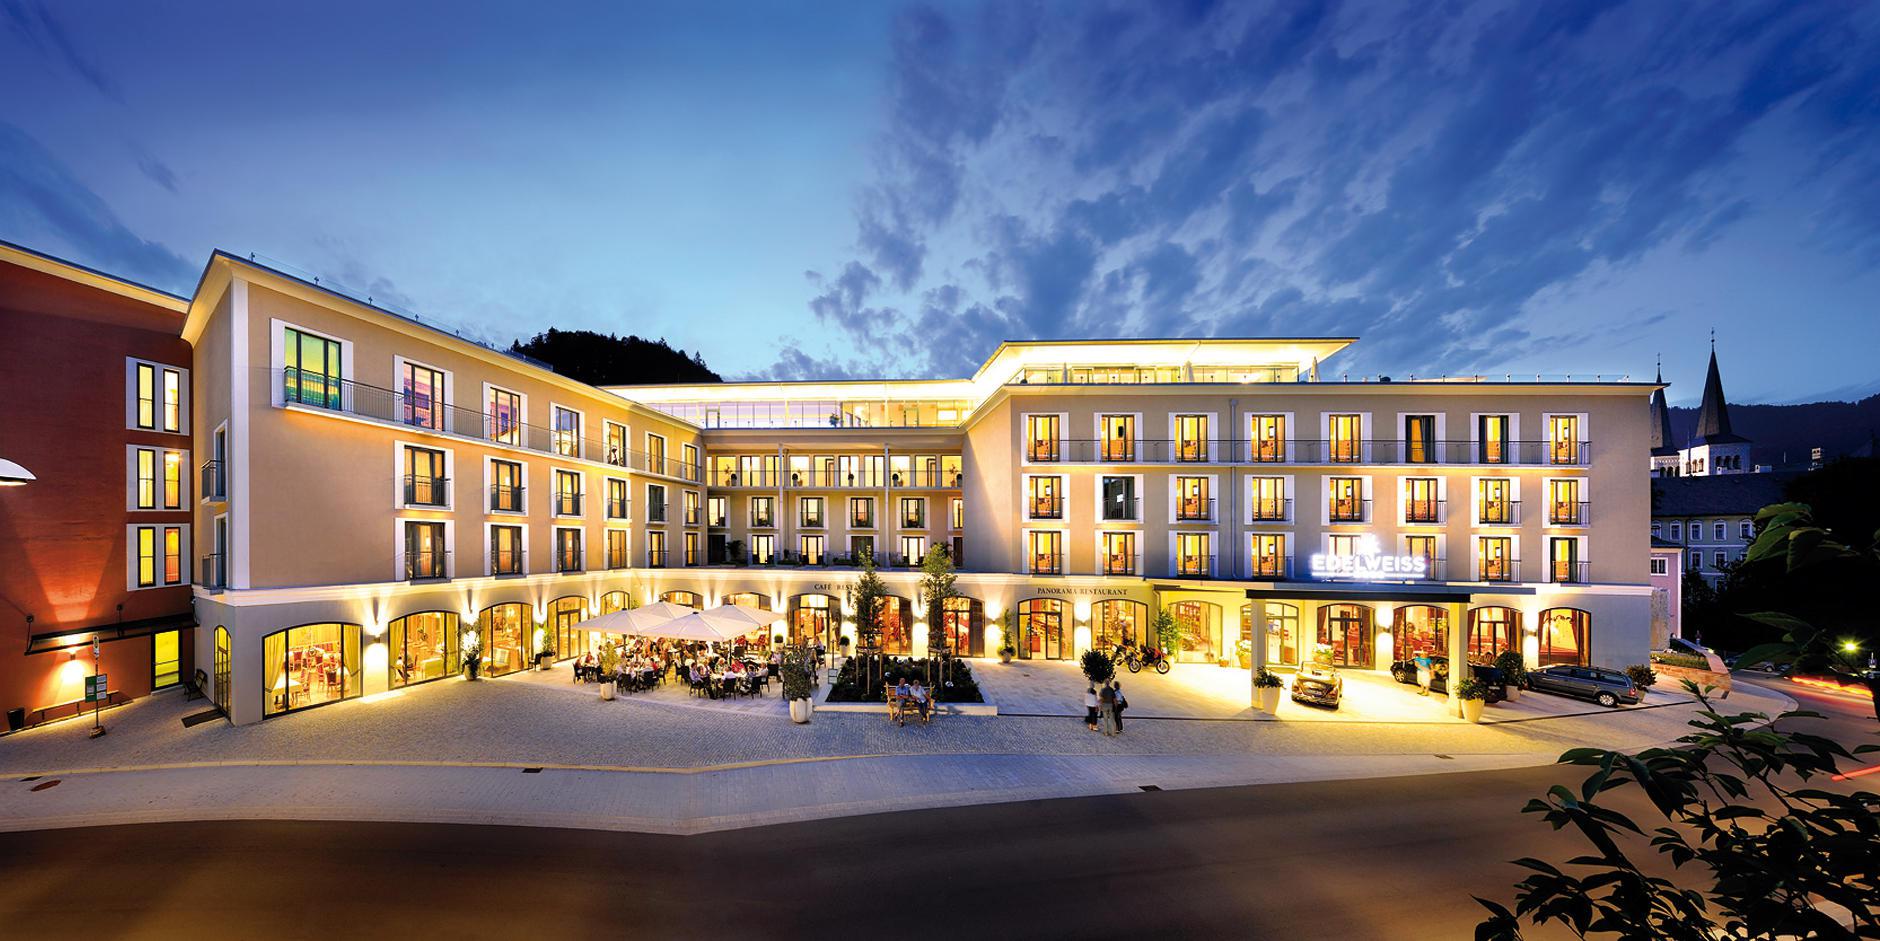 Chcete bydlet v tomto hotelu? © Hotel Edelweiss, Berchtesgaden